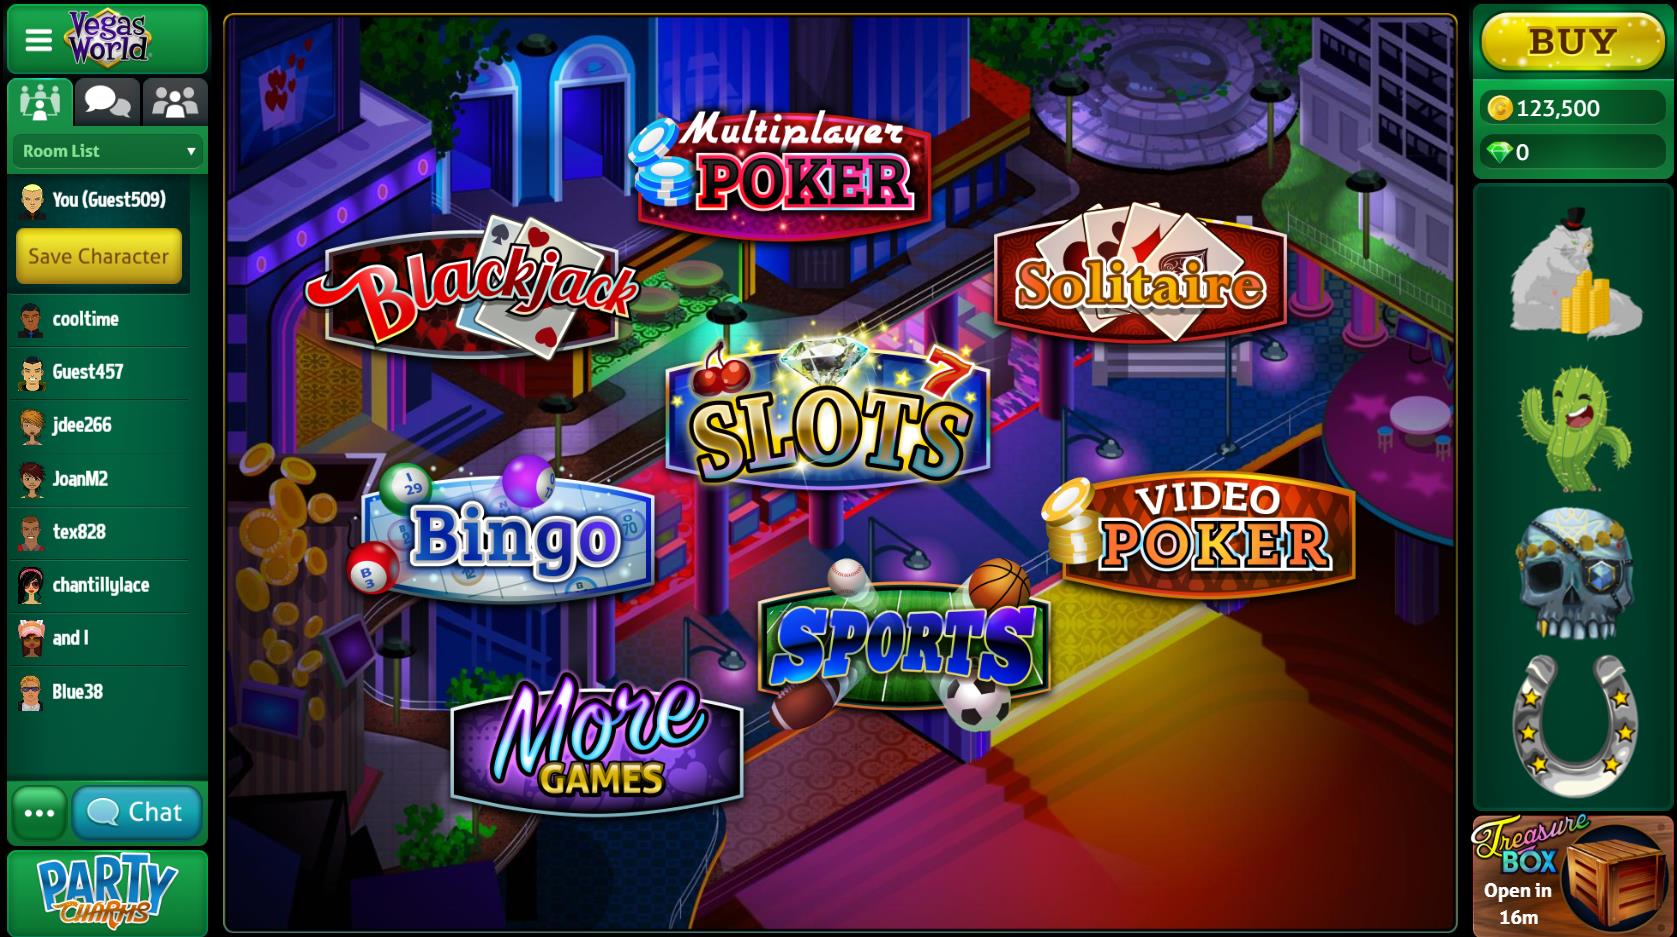 Vegas World Free Online Casino Games